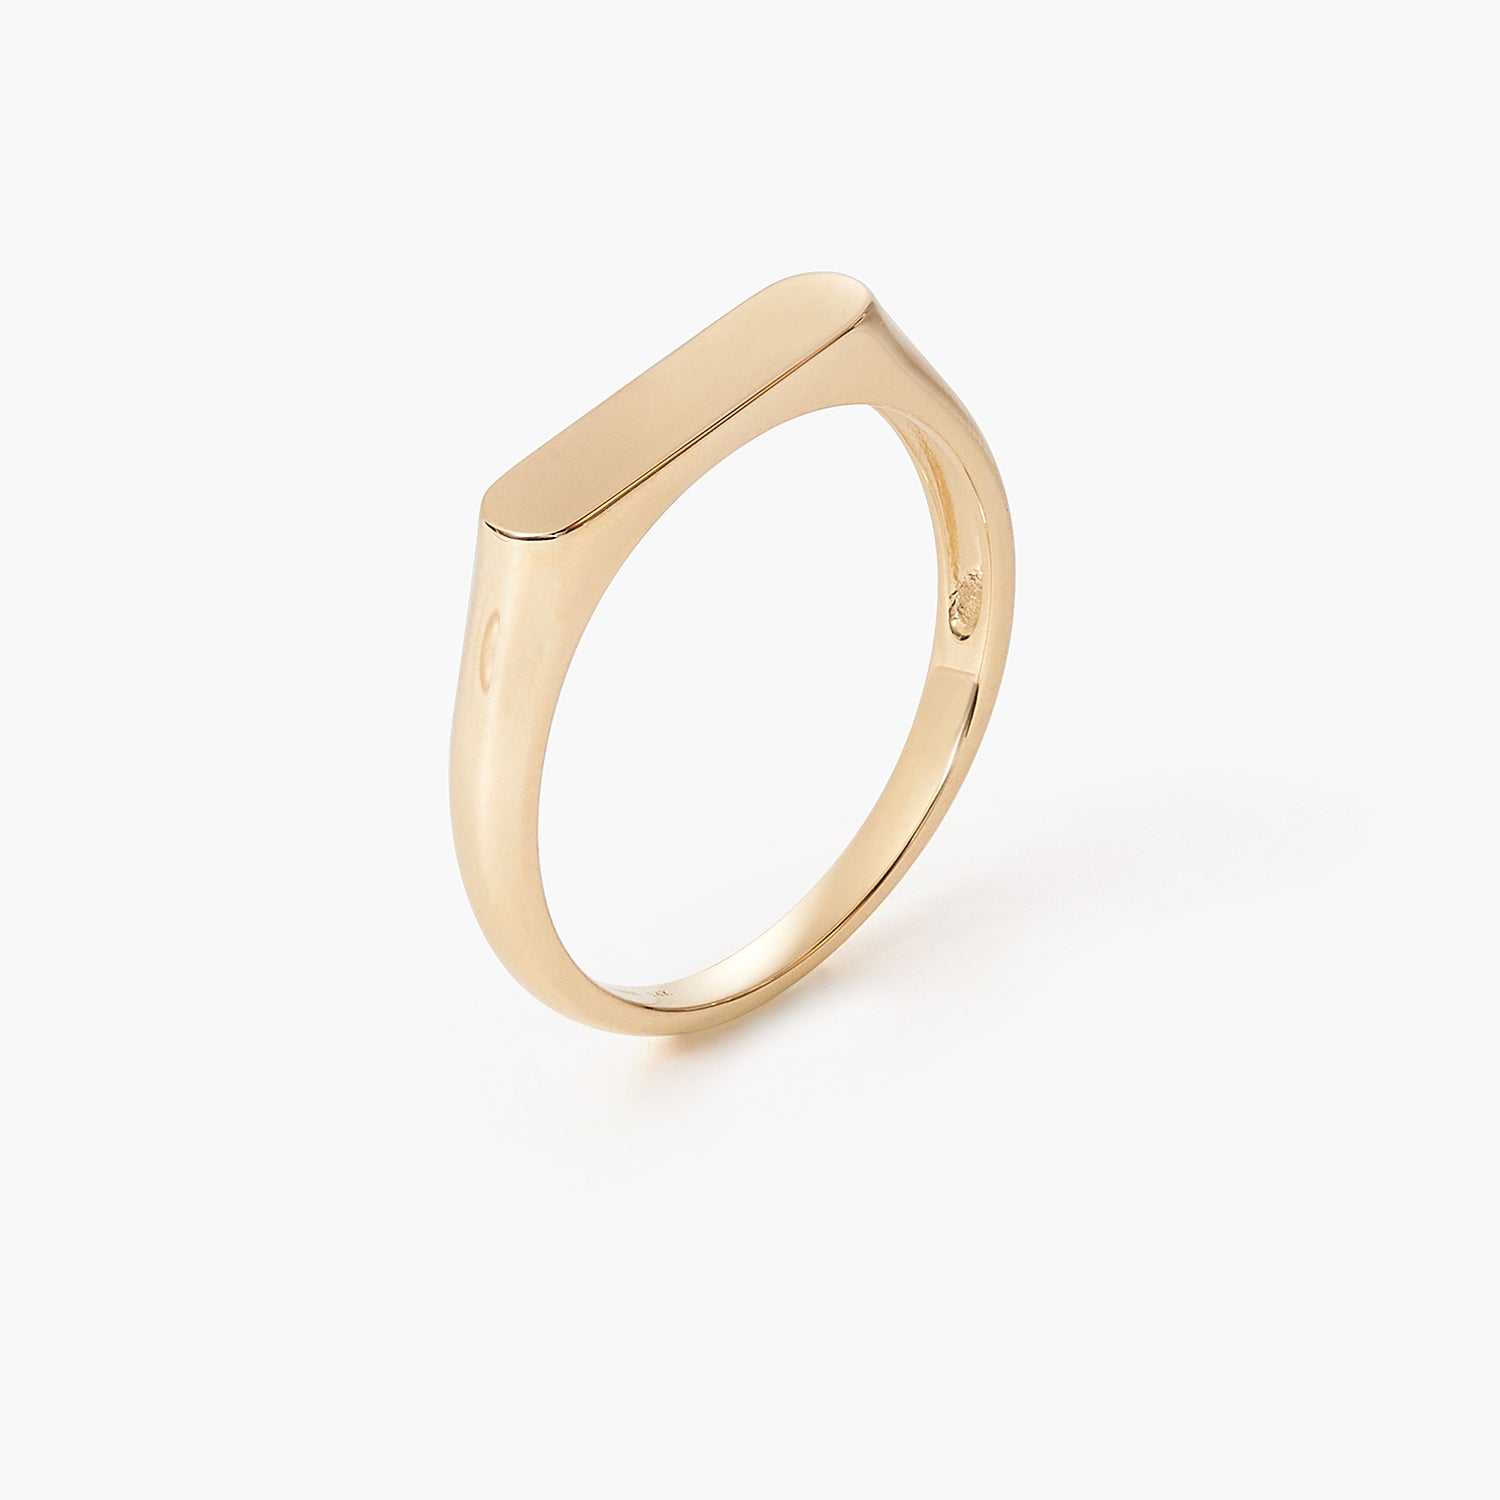 Gold name ring designs for men || Men gold rings with name design #goldring  #menring #kaurtrends - YouTube